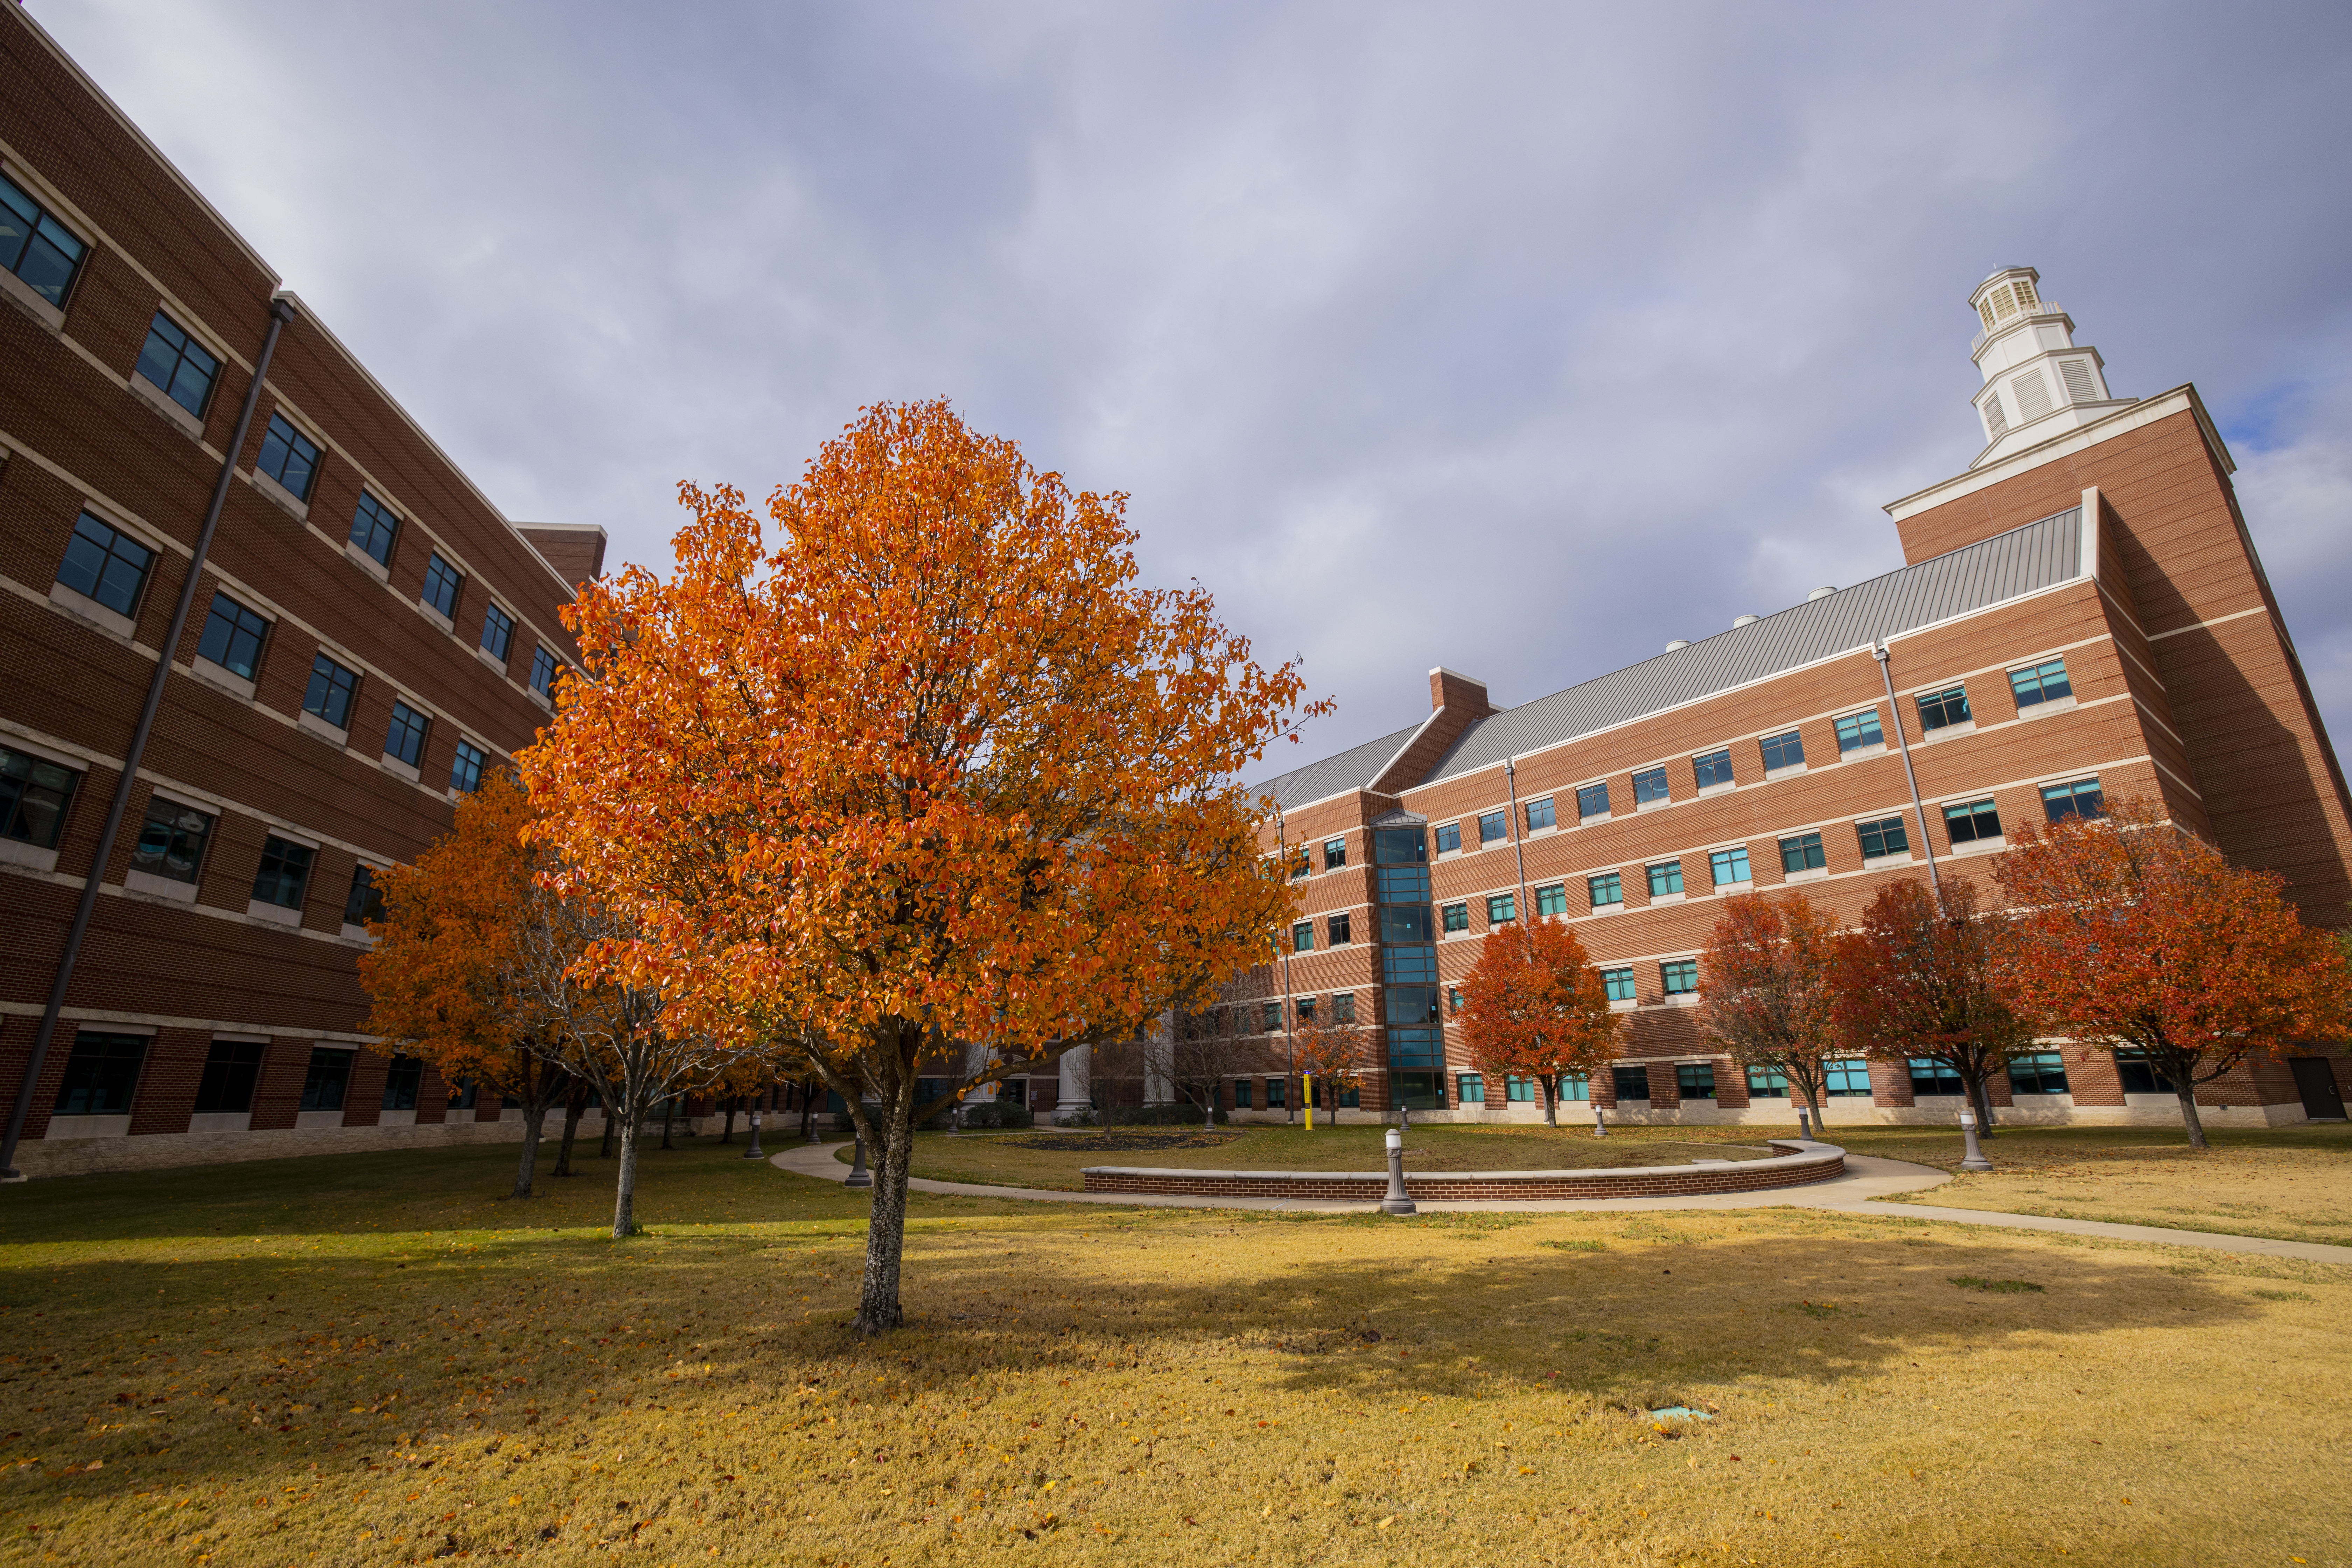 Leaves change color outside the Baylor Sciences Building.